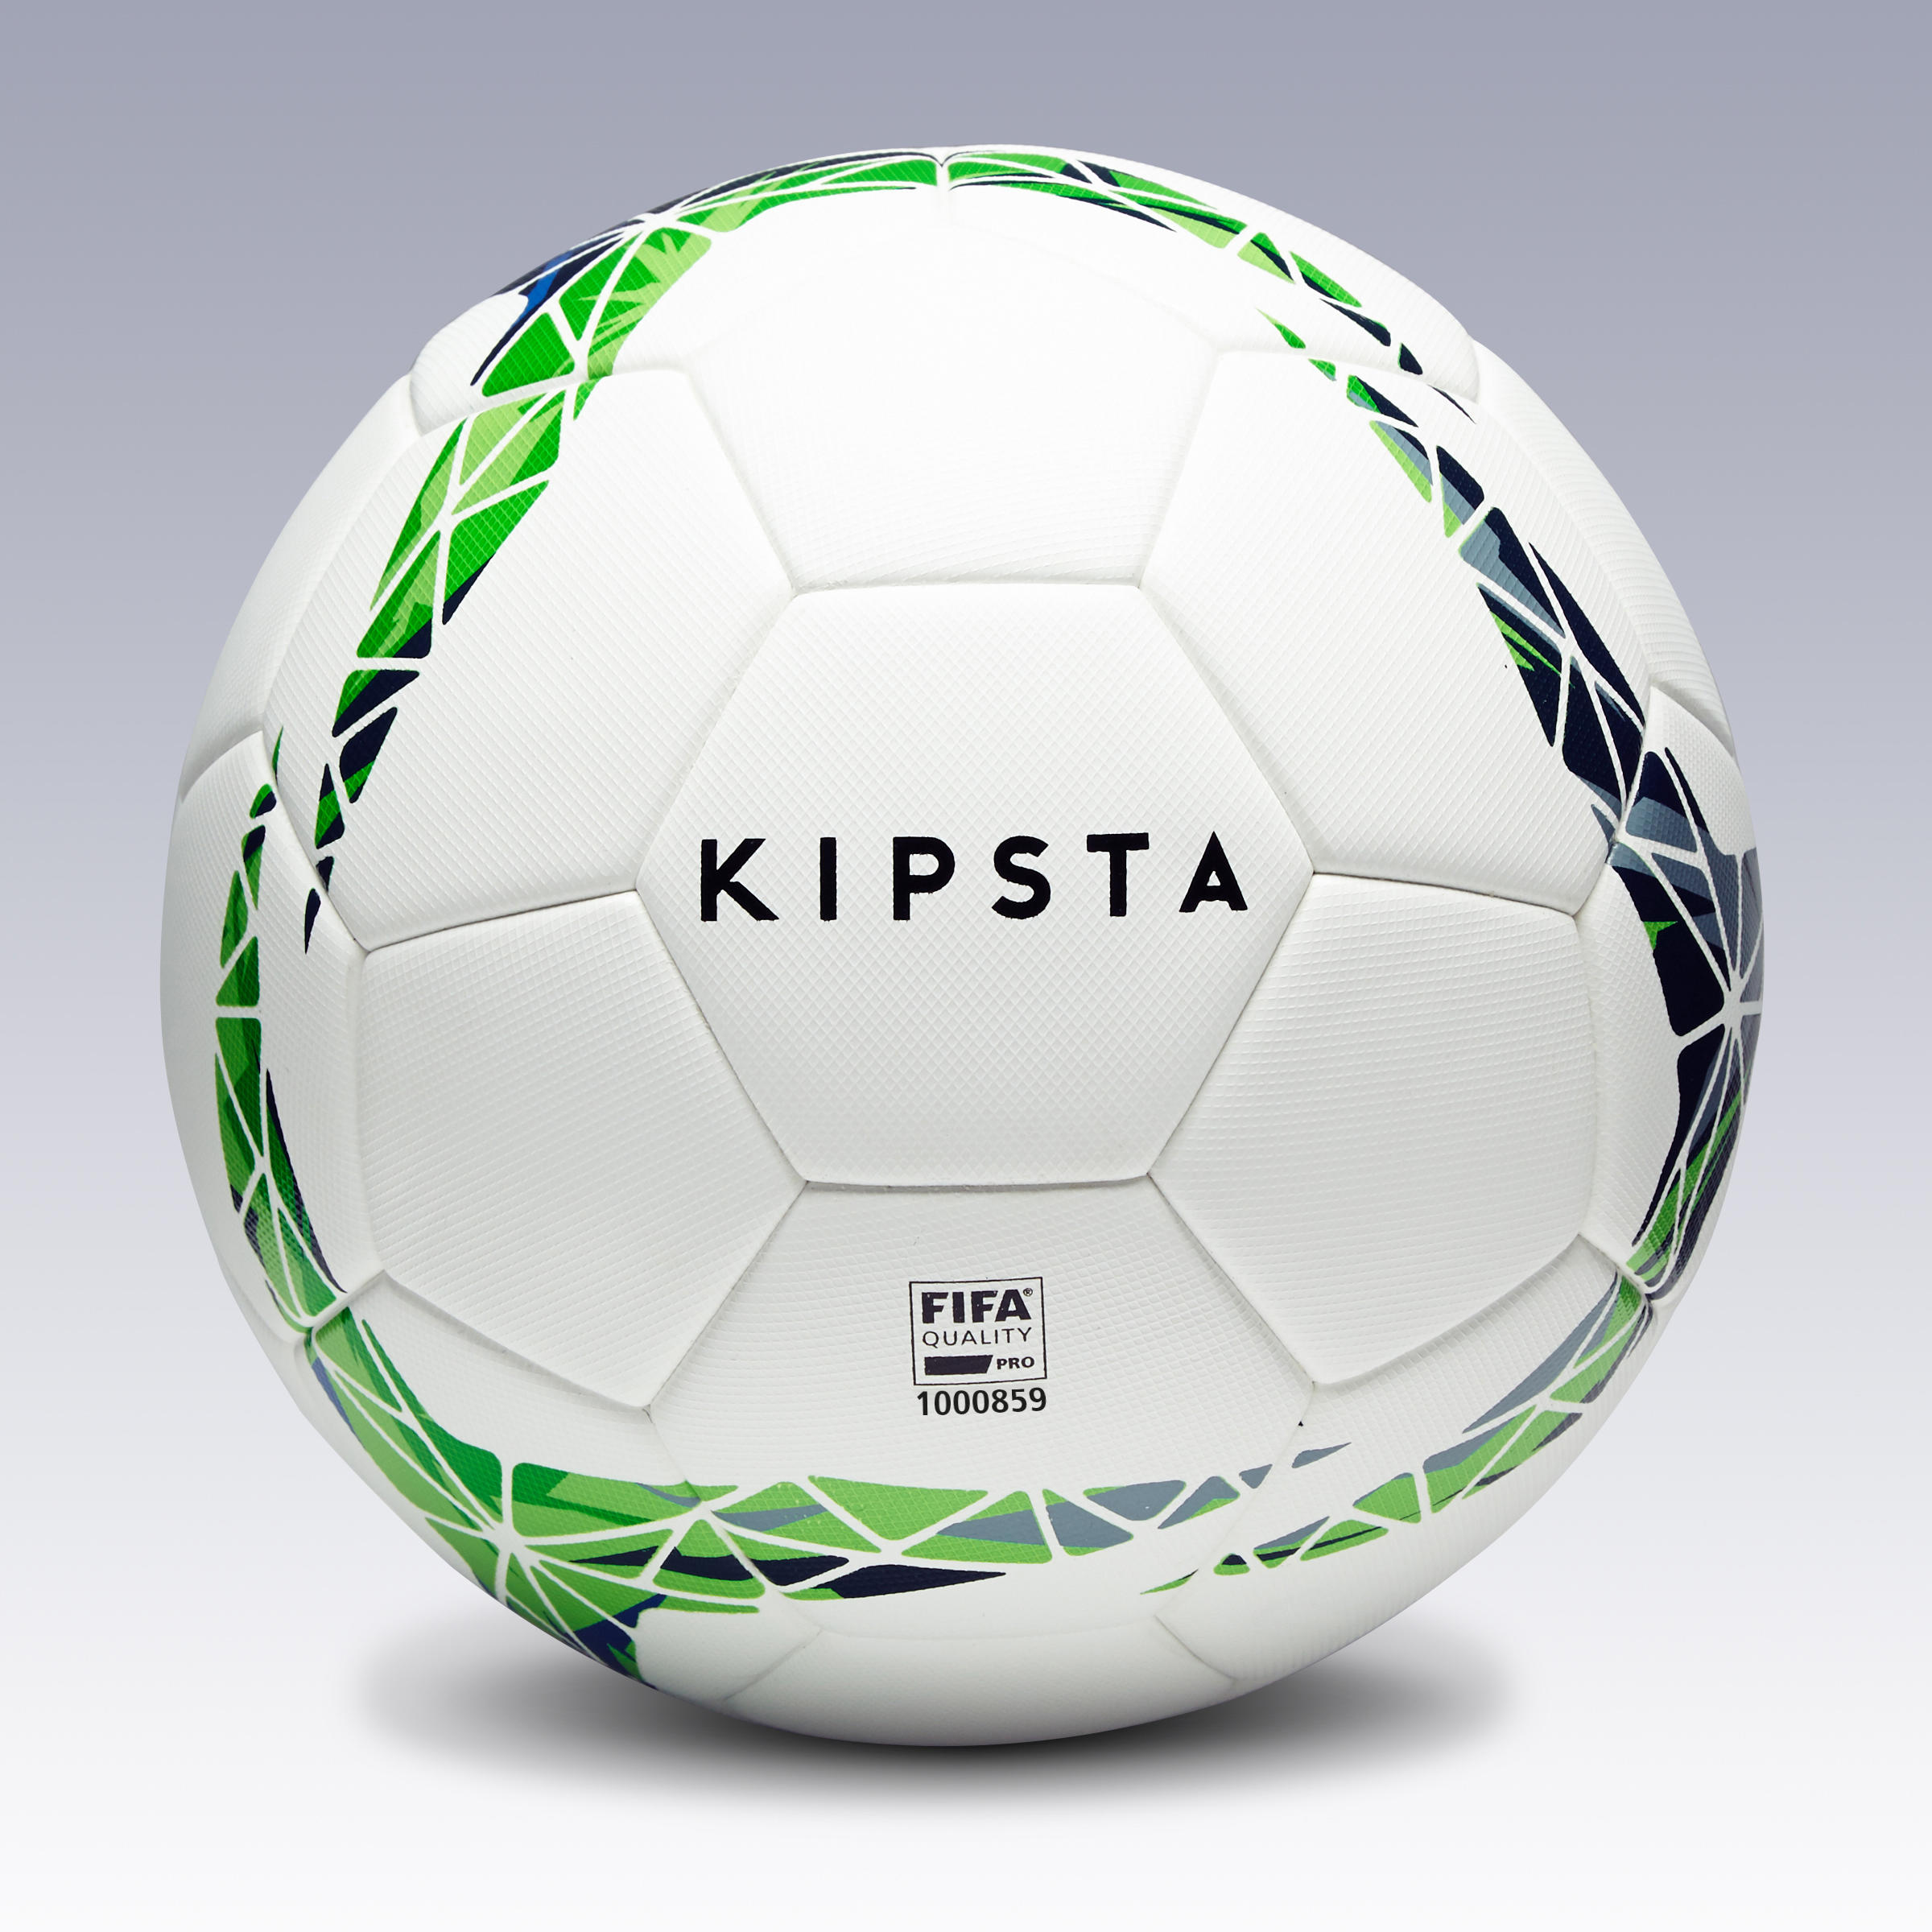 Pro fifa. Мяч KIPSTA f900. KIPSTA мяч футбольный f900. Мяч кипста ф 900. Футбольный мяч KIPSTA f900 FIFA Pro.